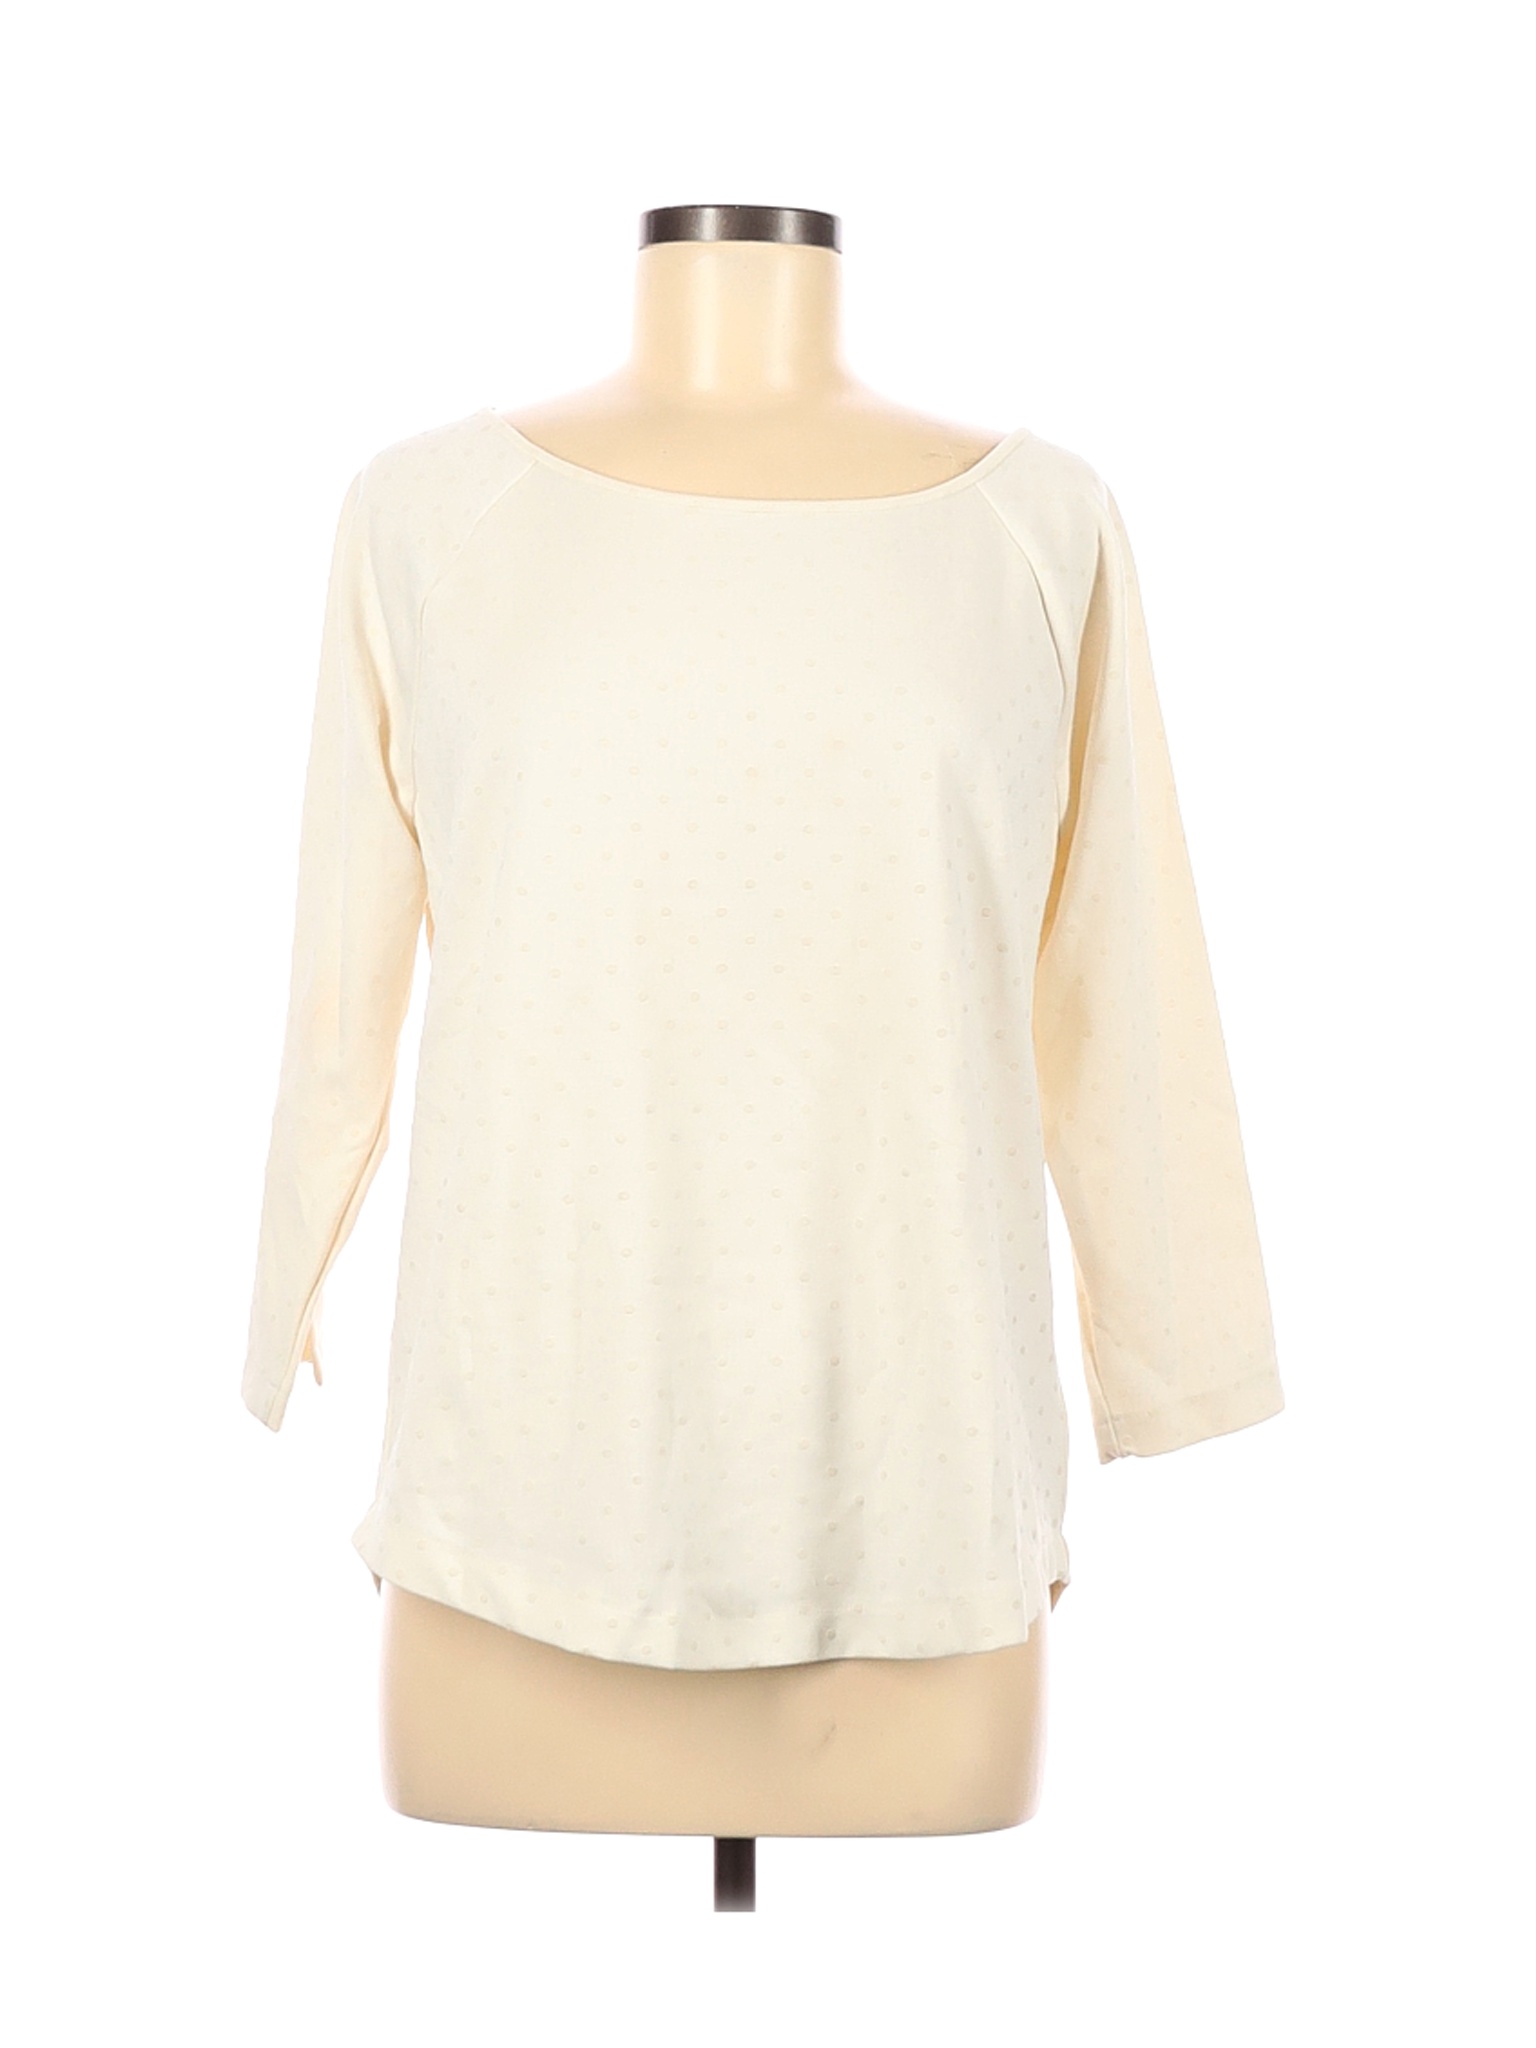 Gap Outlet Women Ivory 3/4 Sleeve Top L | eBay